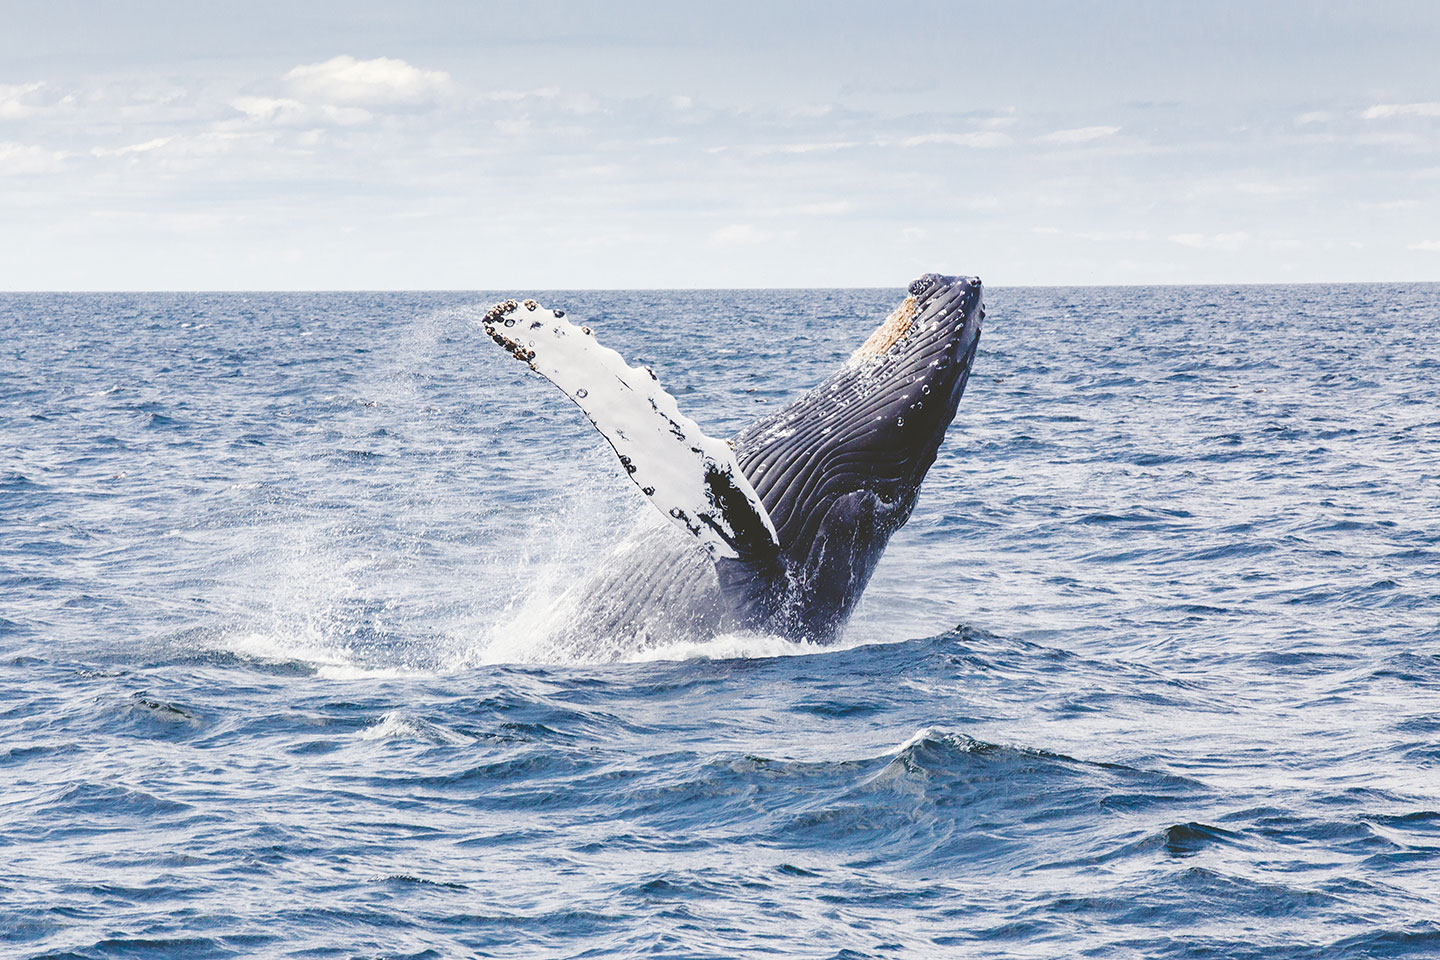 A humpback whale cresting